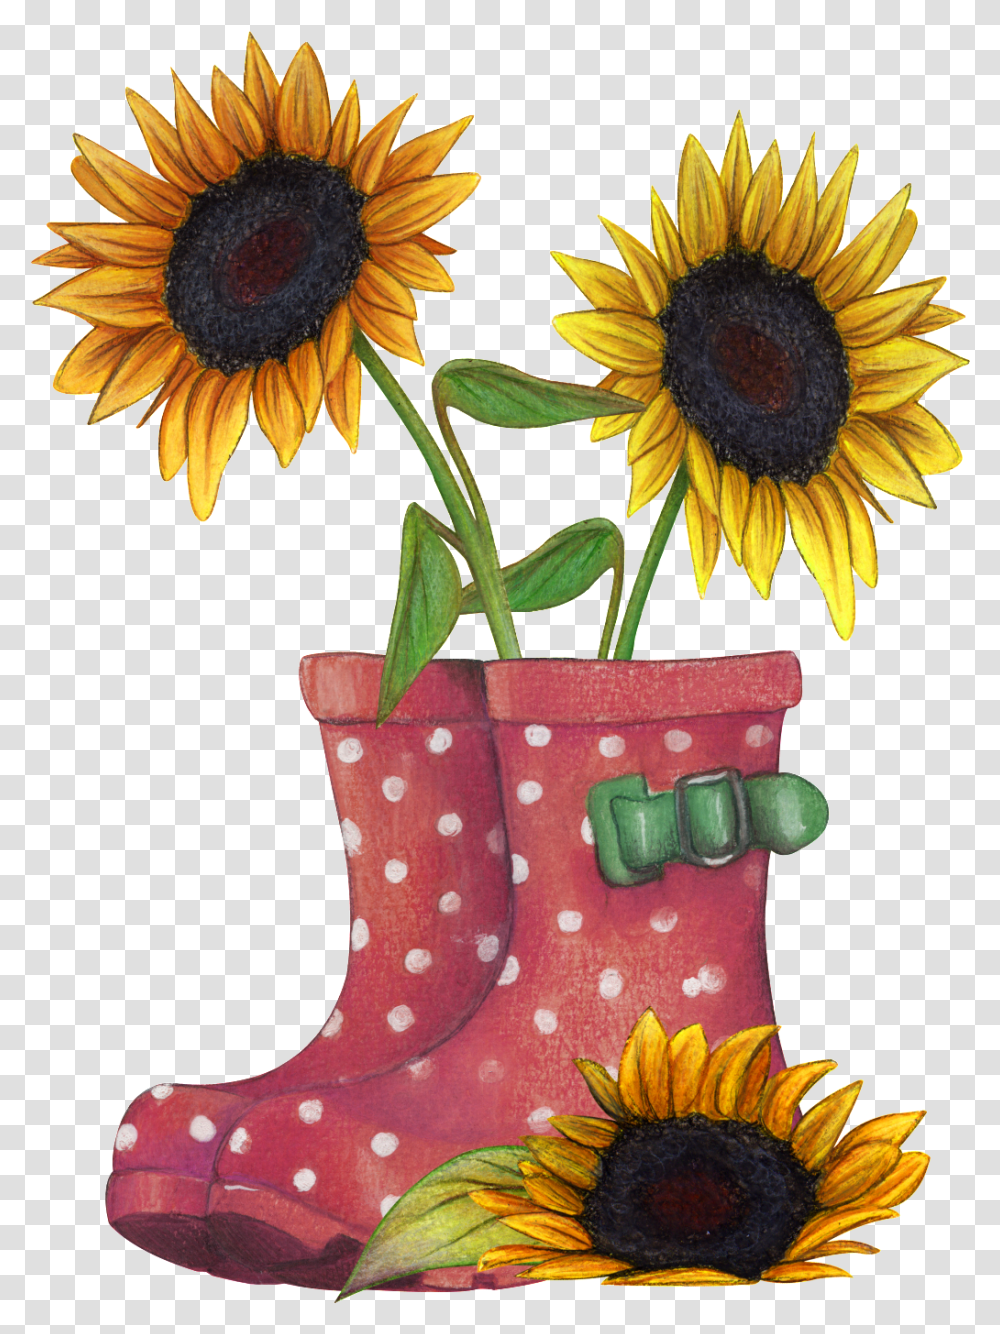 Download Sunflower Placed In Rain Boots Sunflowers Rain Boots, Plant, Blossom, Flower Arrangement, Daisy Transparent Png